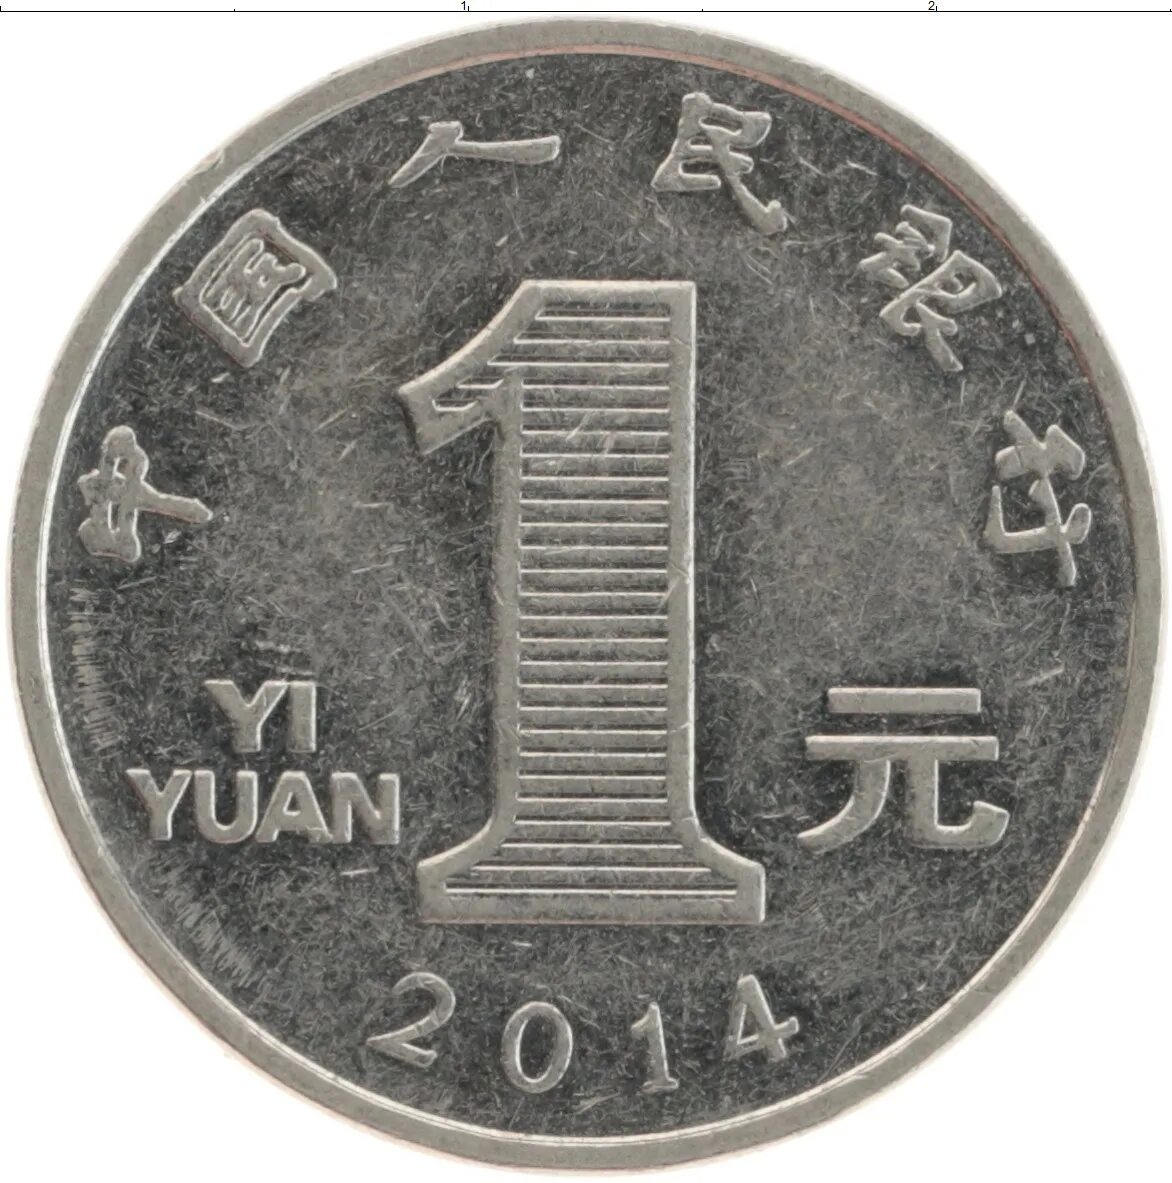 Китайский юань монеты. 1 Юань монета. Китайский юань монета. Юань Монетка. Монета 1 юань 2014.